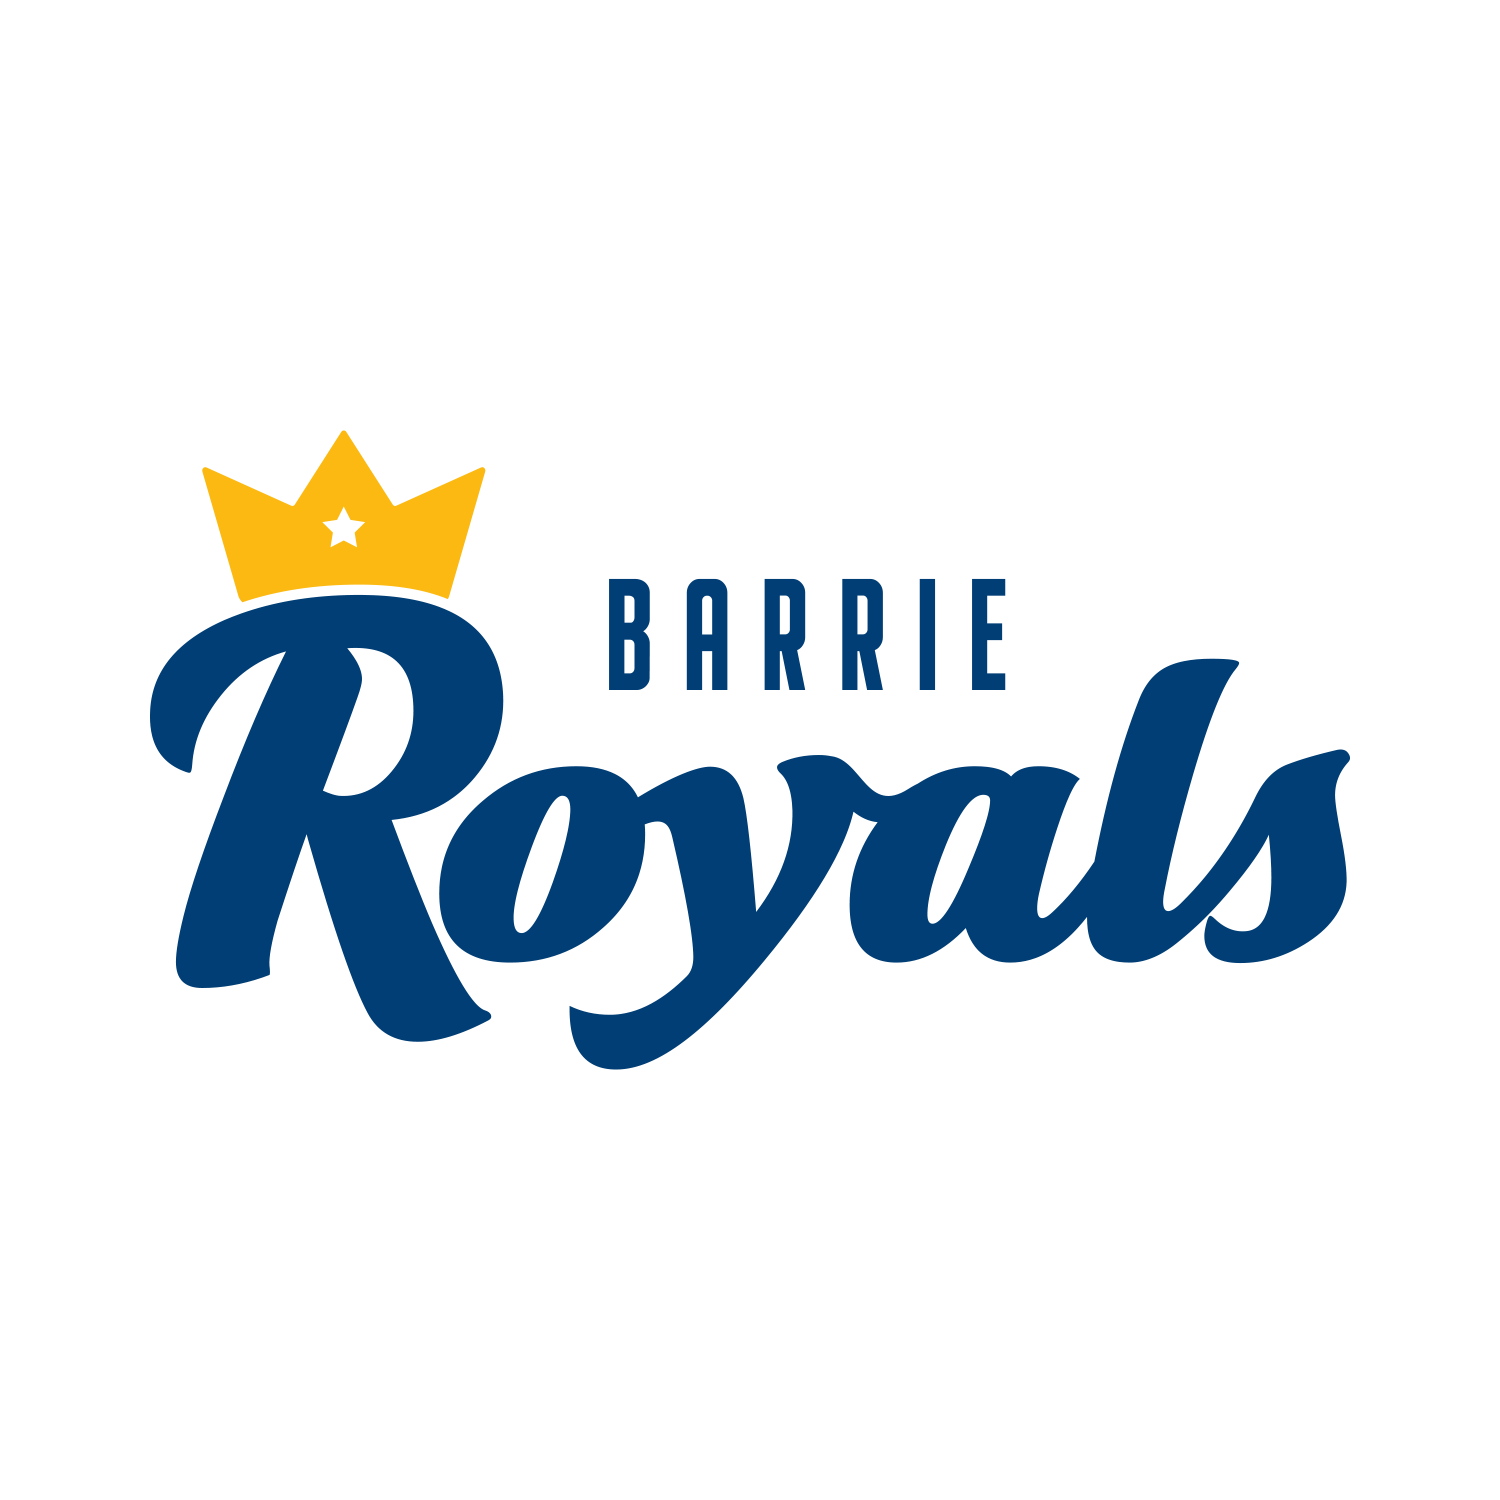 Barrie Royals Basketball